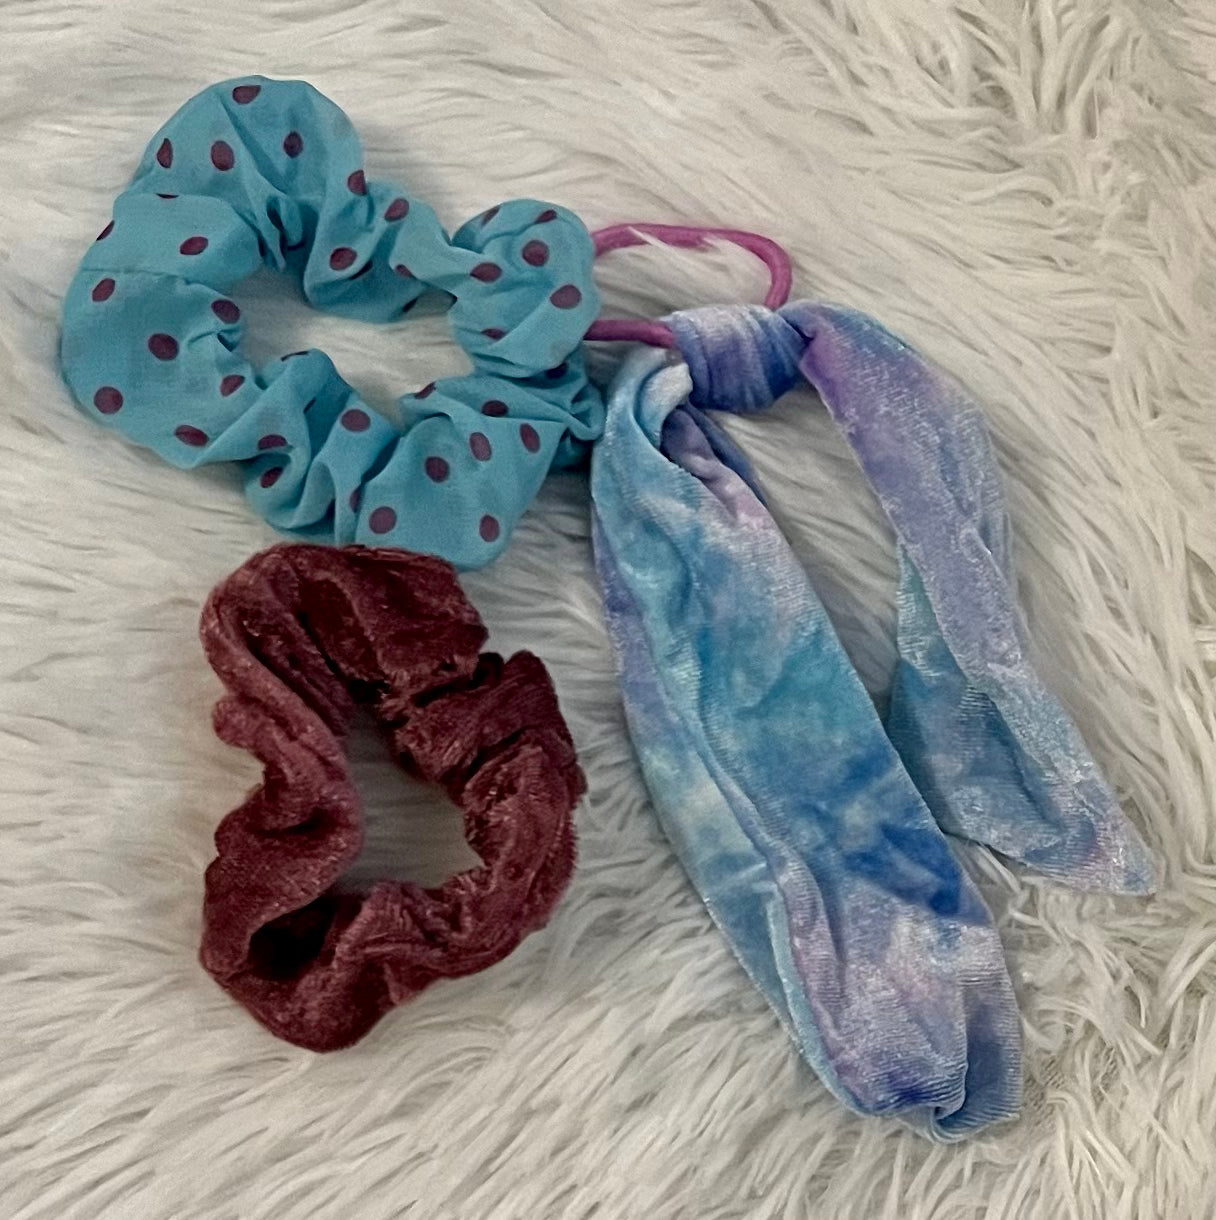 Tie Dye Ponytail Scrunchie Packs